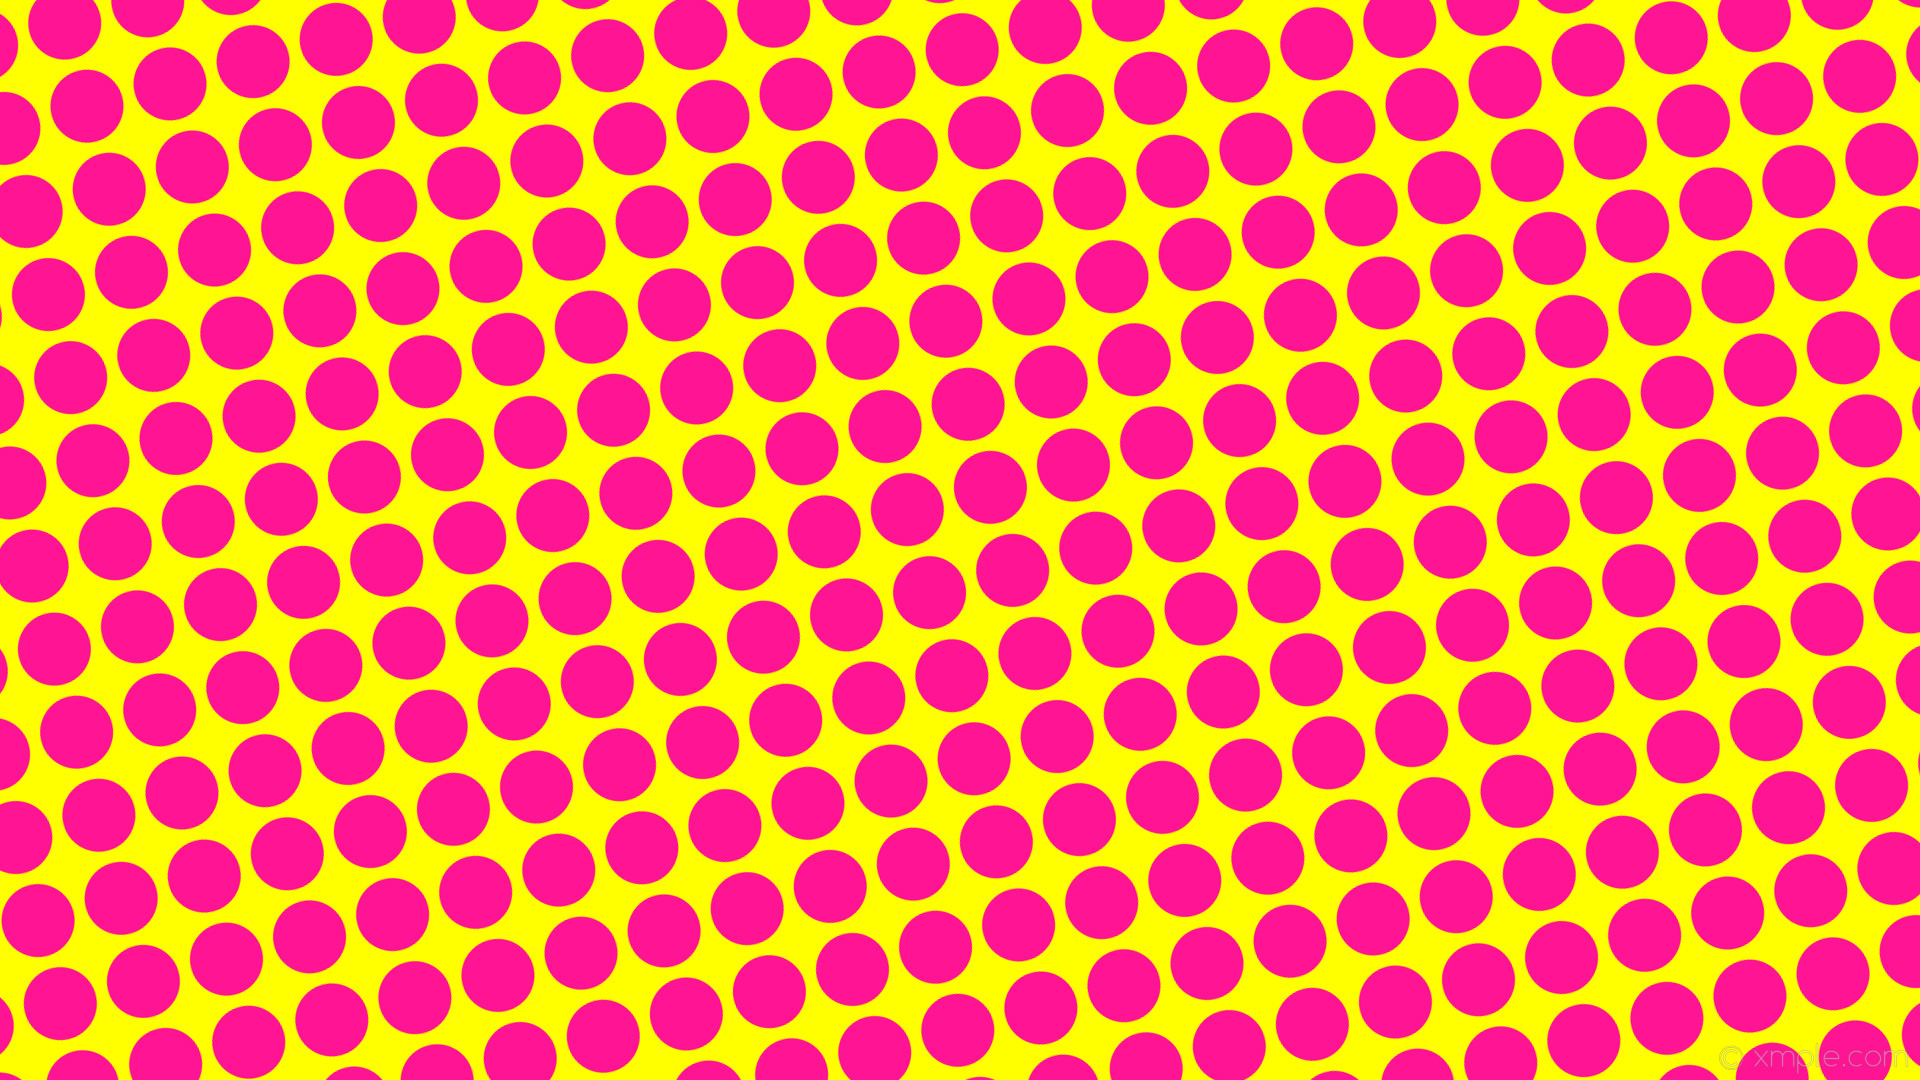 1920x1080 wallpaper yellow polka dots pink spots deep pink #ffff00 #ff1493 15Â° 73px  86px